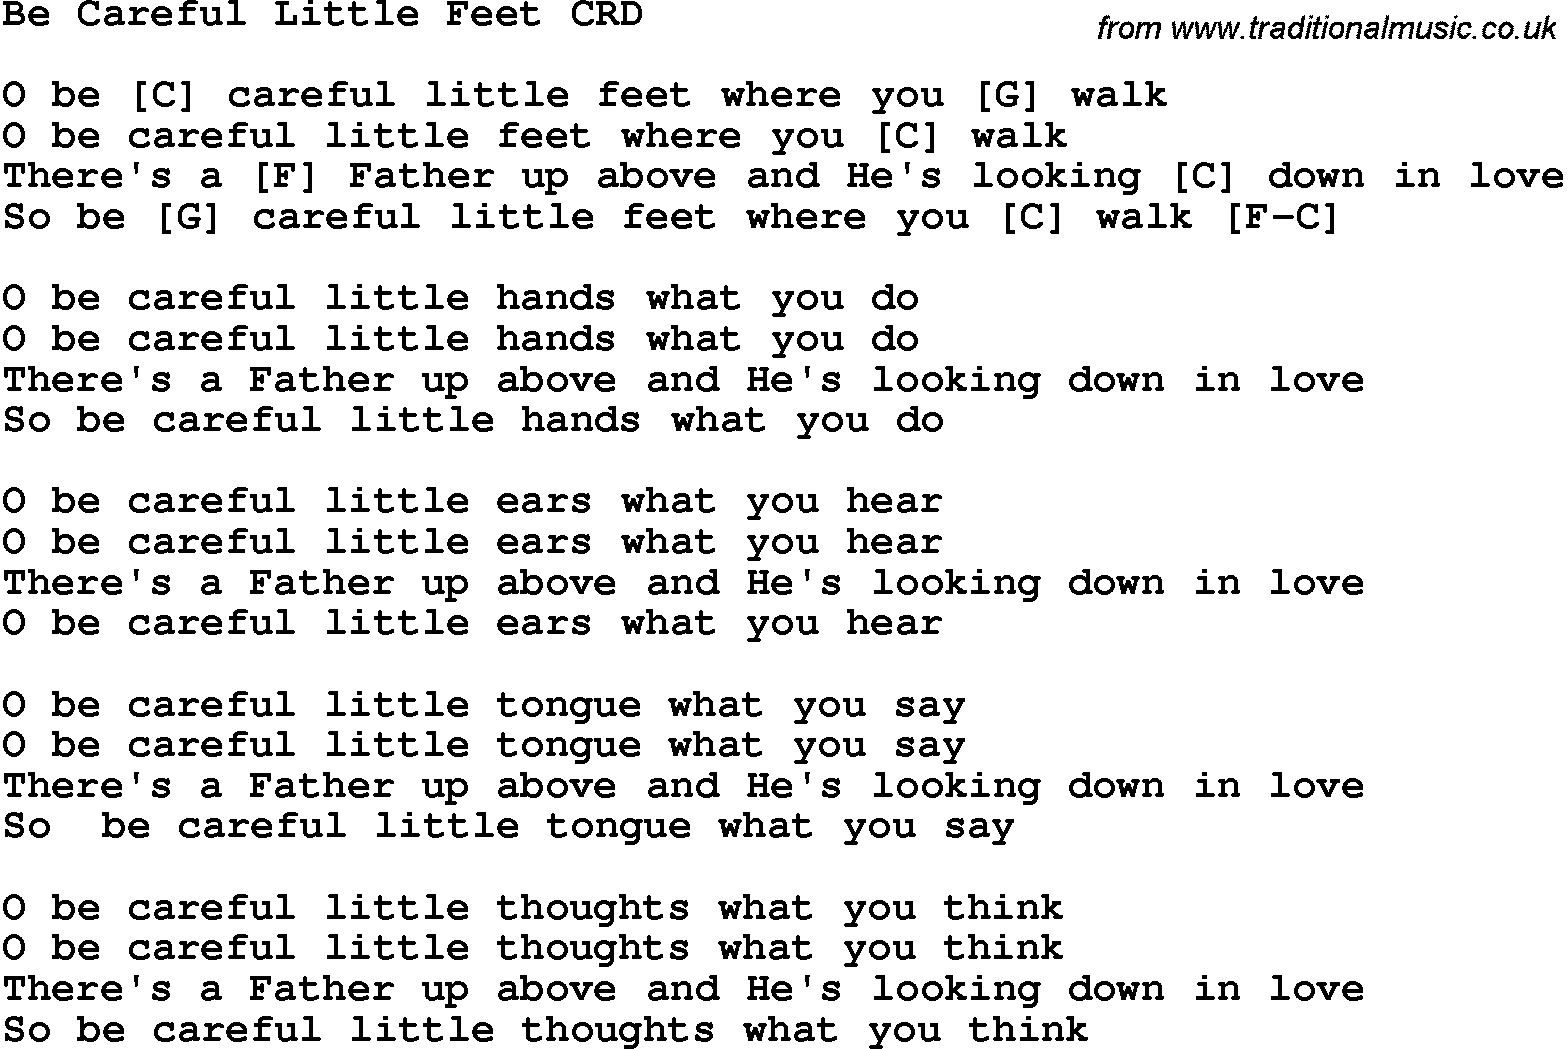 Christian Chlidrens Song Be Careful Little Feet CRD Lyrics & Chords